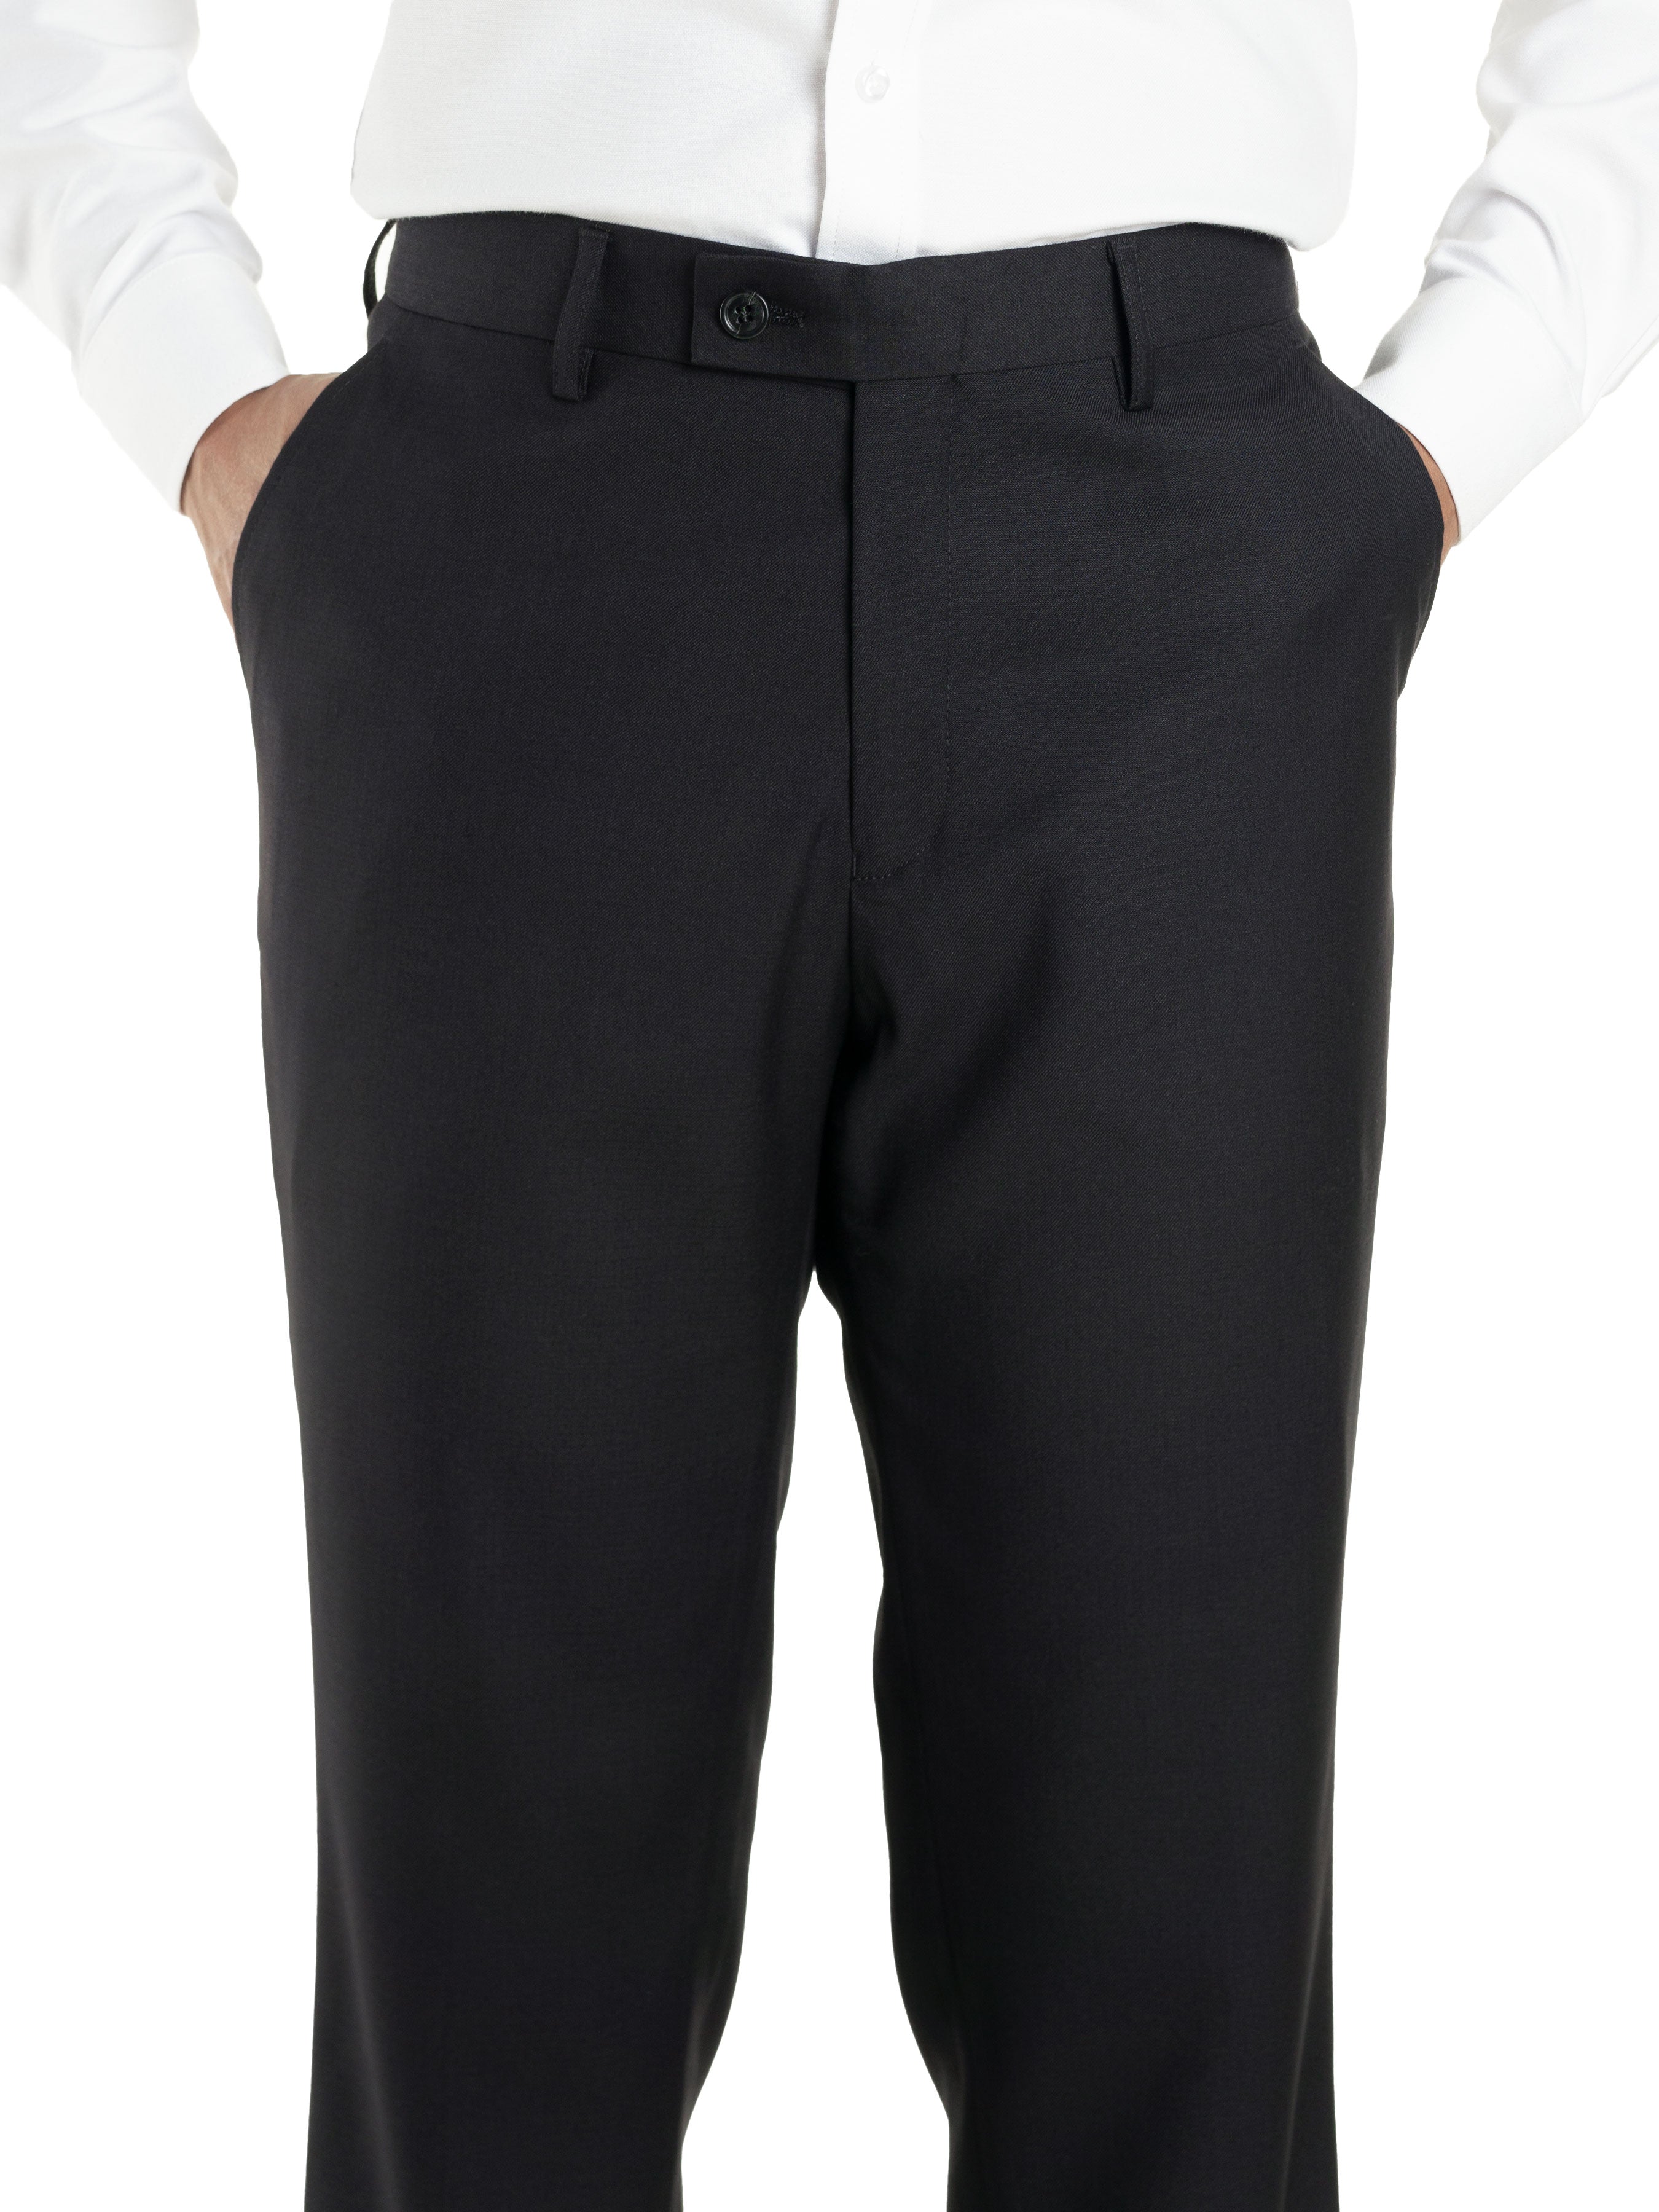 Trousers With Belt Loop - Jet Black Plain (Stretchable) - Zeve Shoes